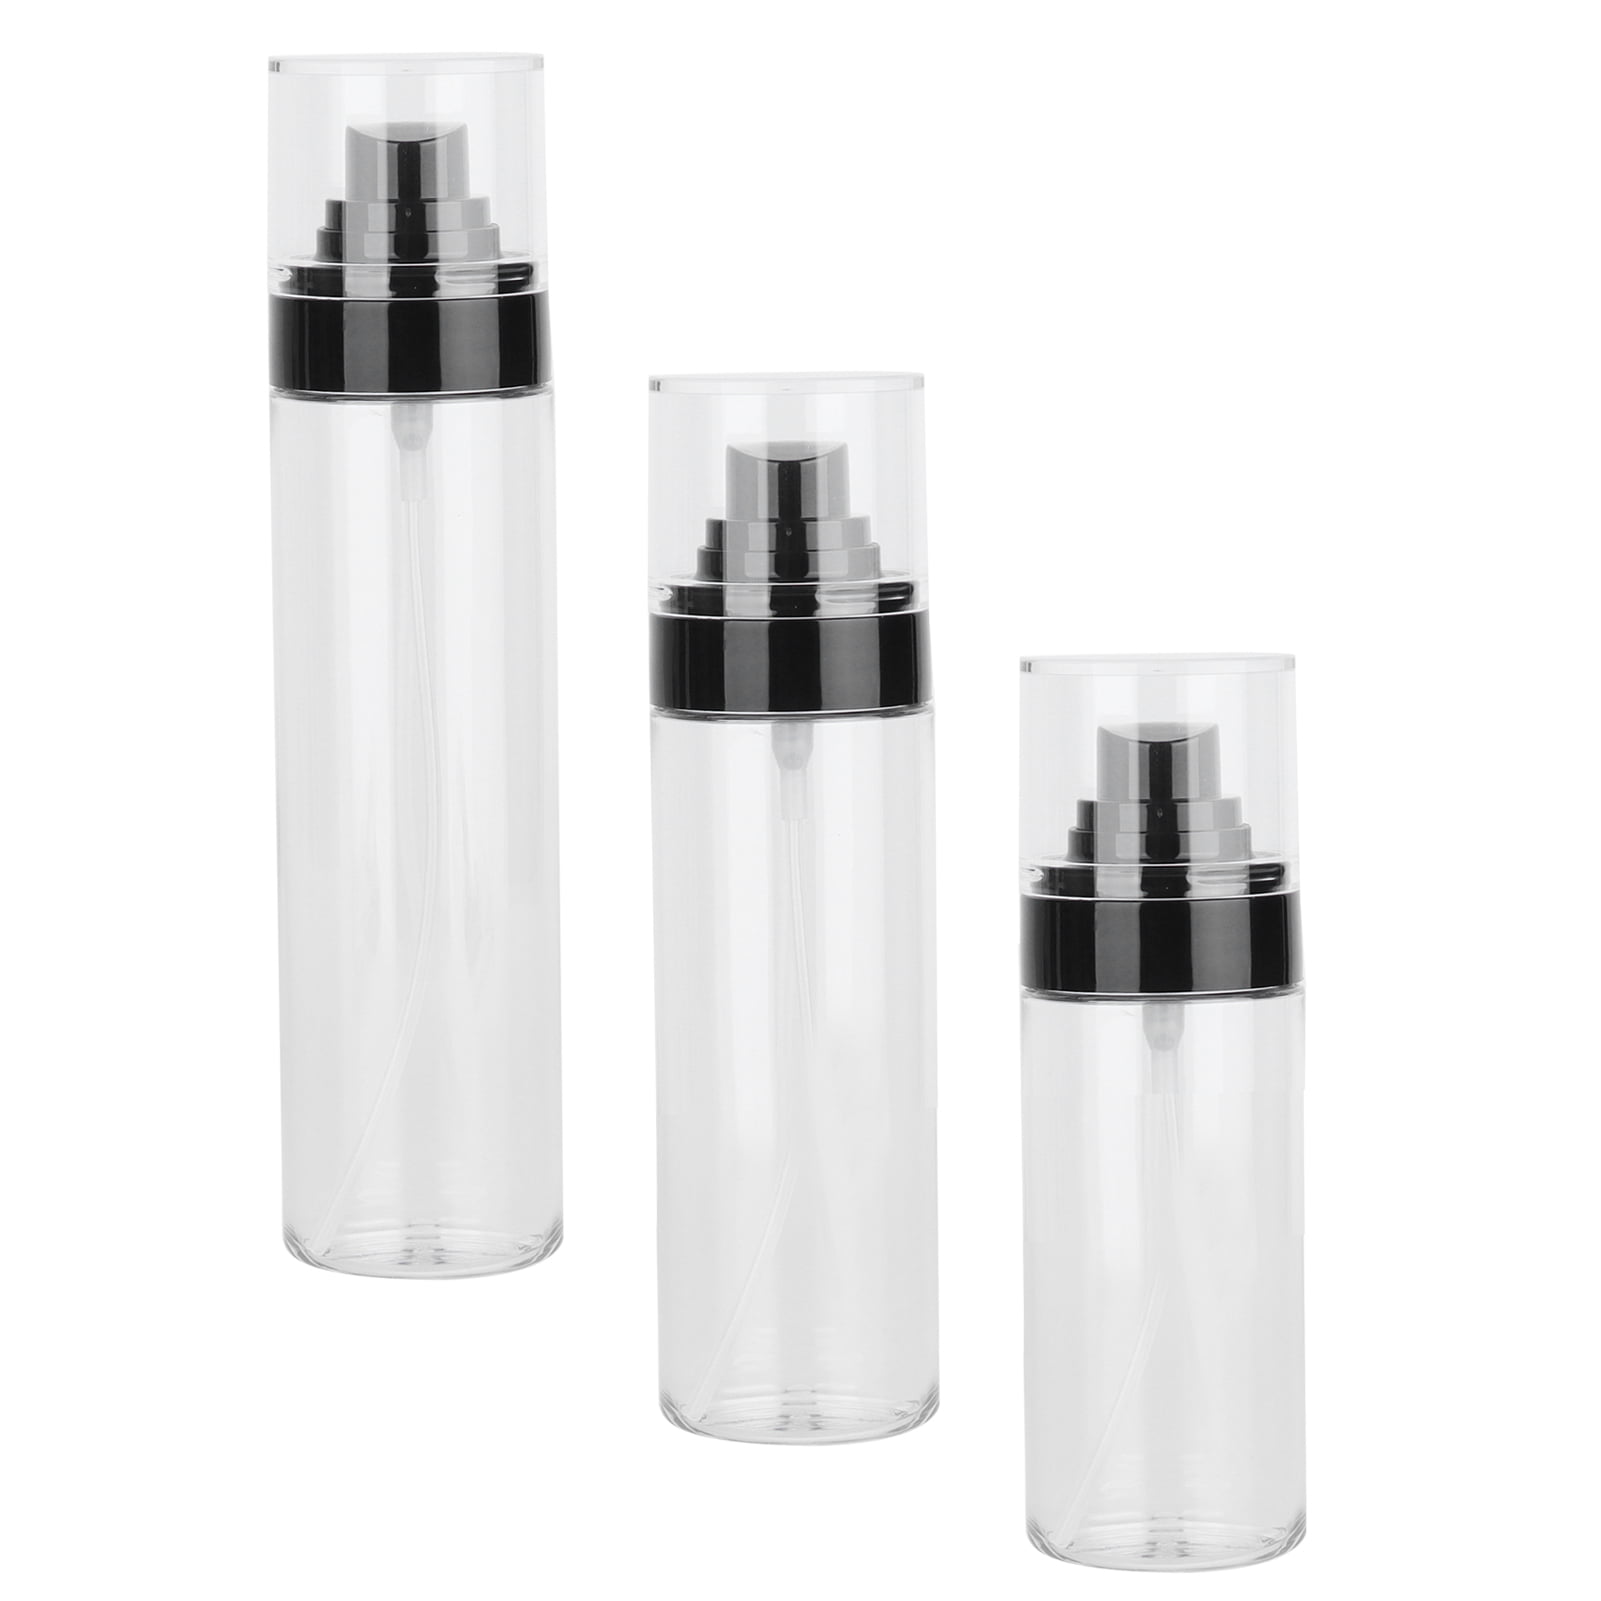 Empty Spray Bottles Travel Size 100ml/3.4oz 5 Pack Small Spray Bottle  Aluminum Metal Fine Mist Refillable Atomizer Set with Lids for Liquids  Skincare